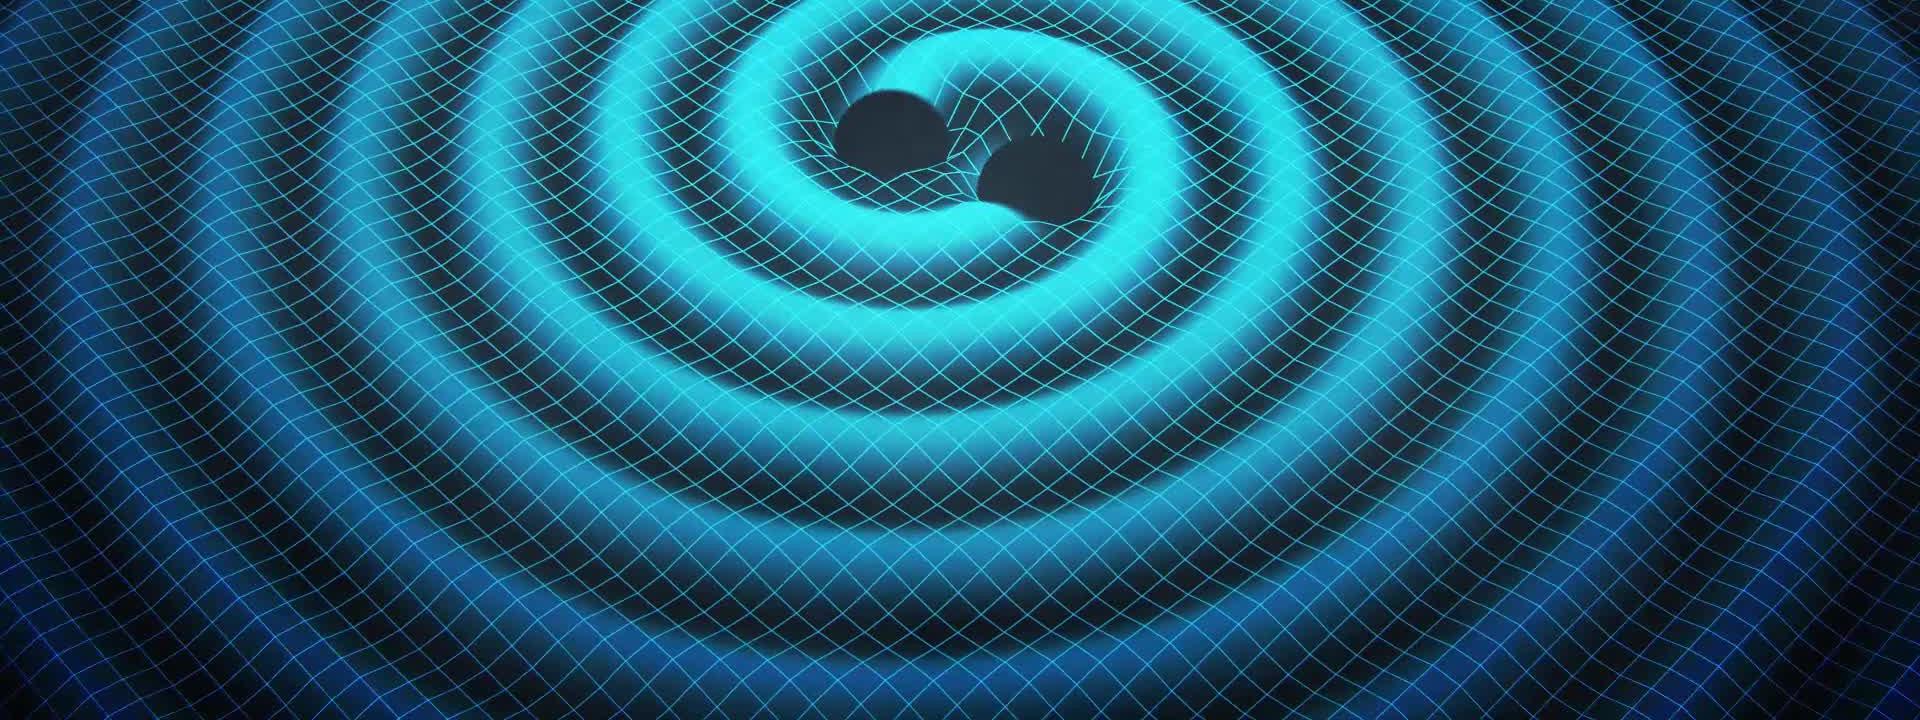 Artist’s impression of a gravitational wave